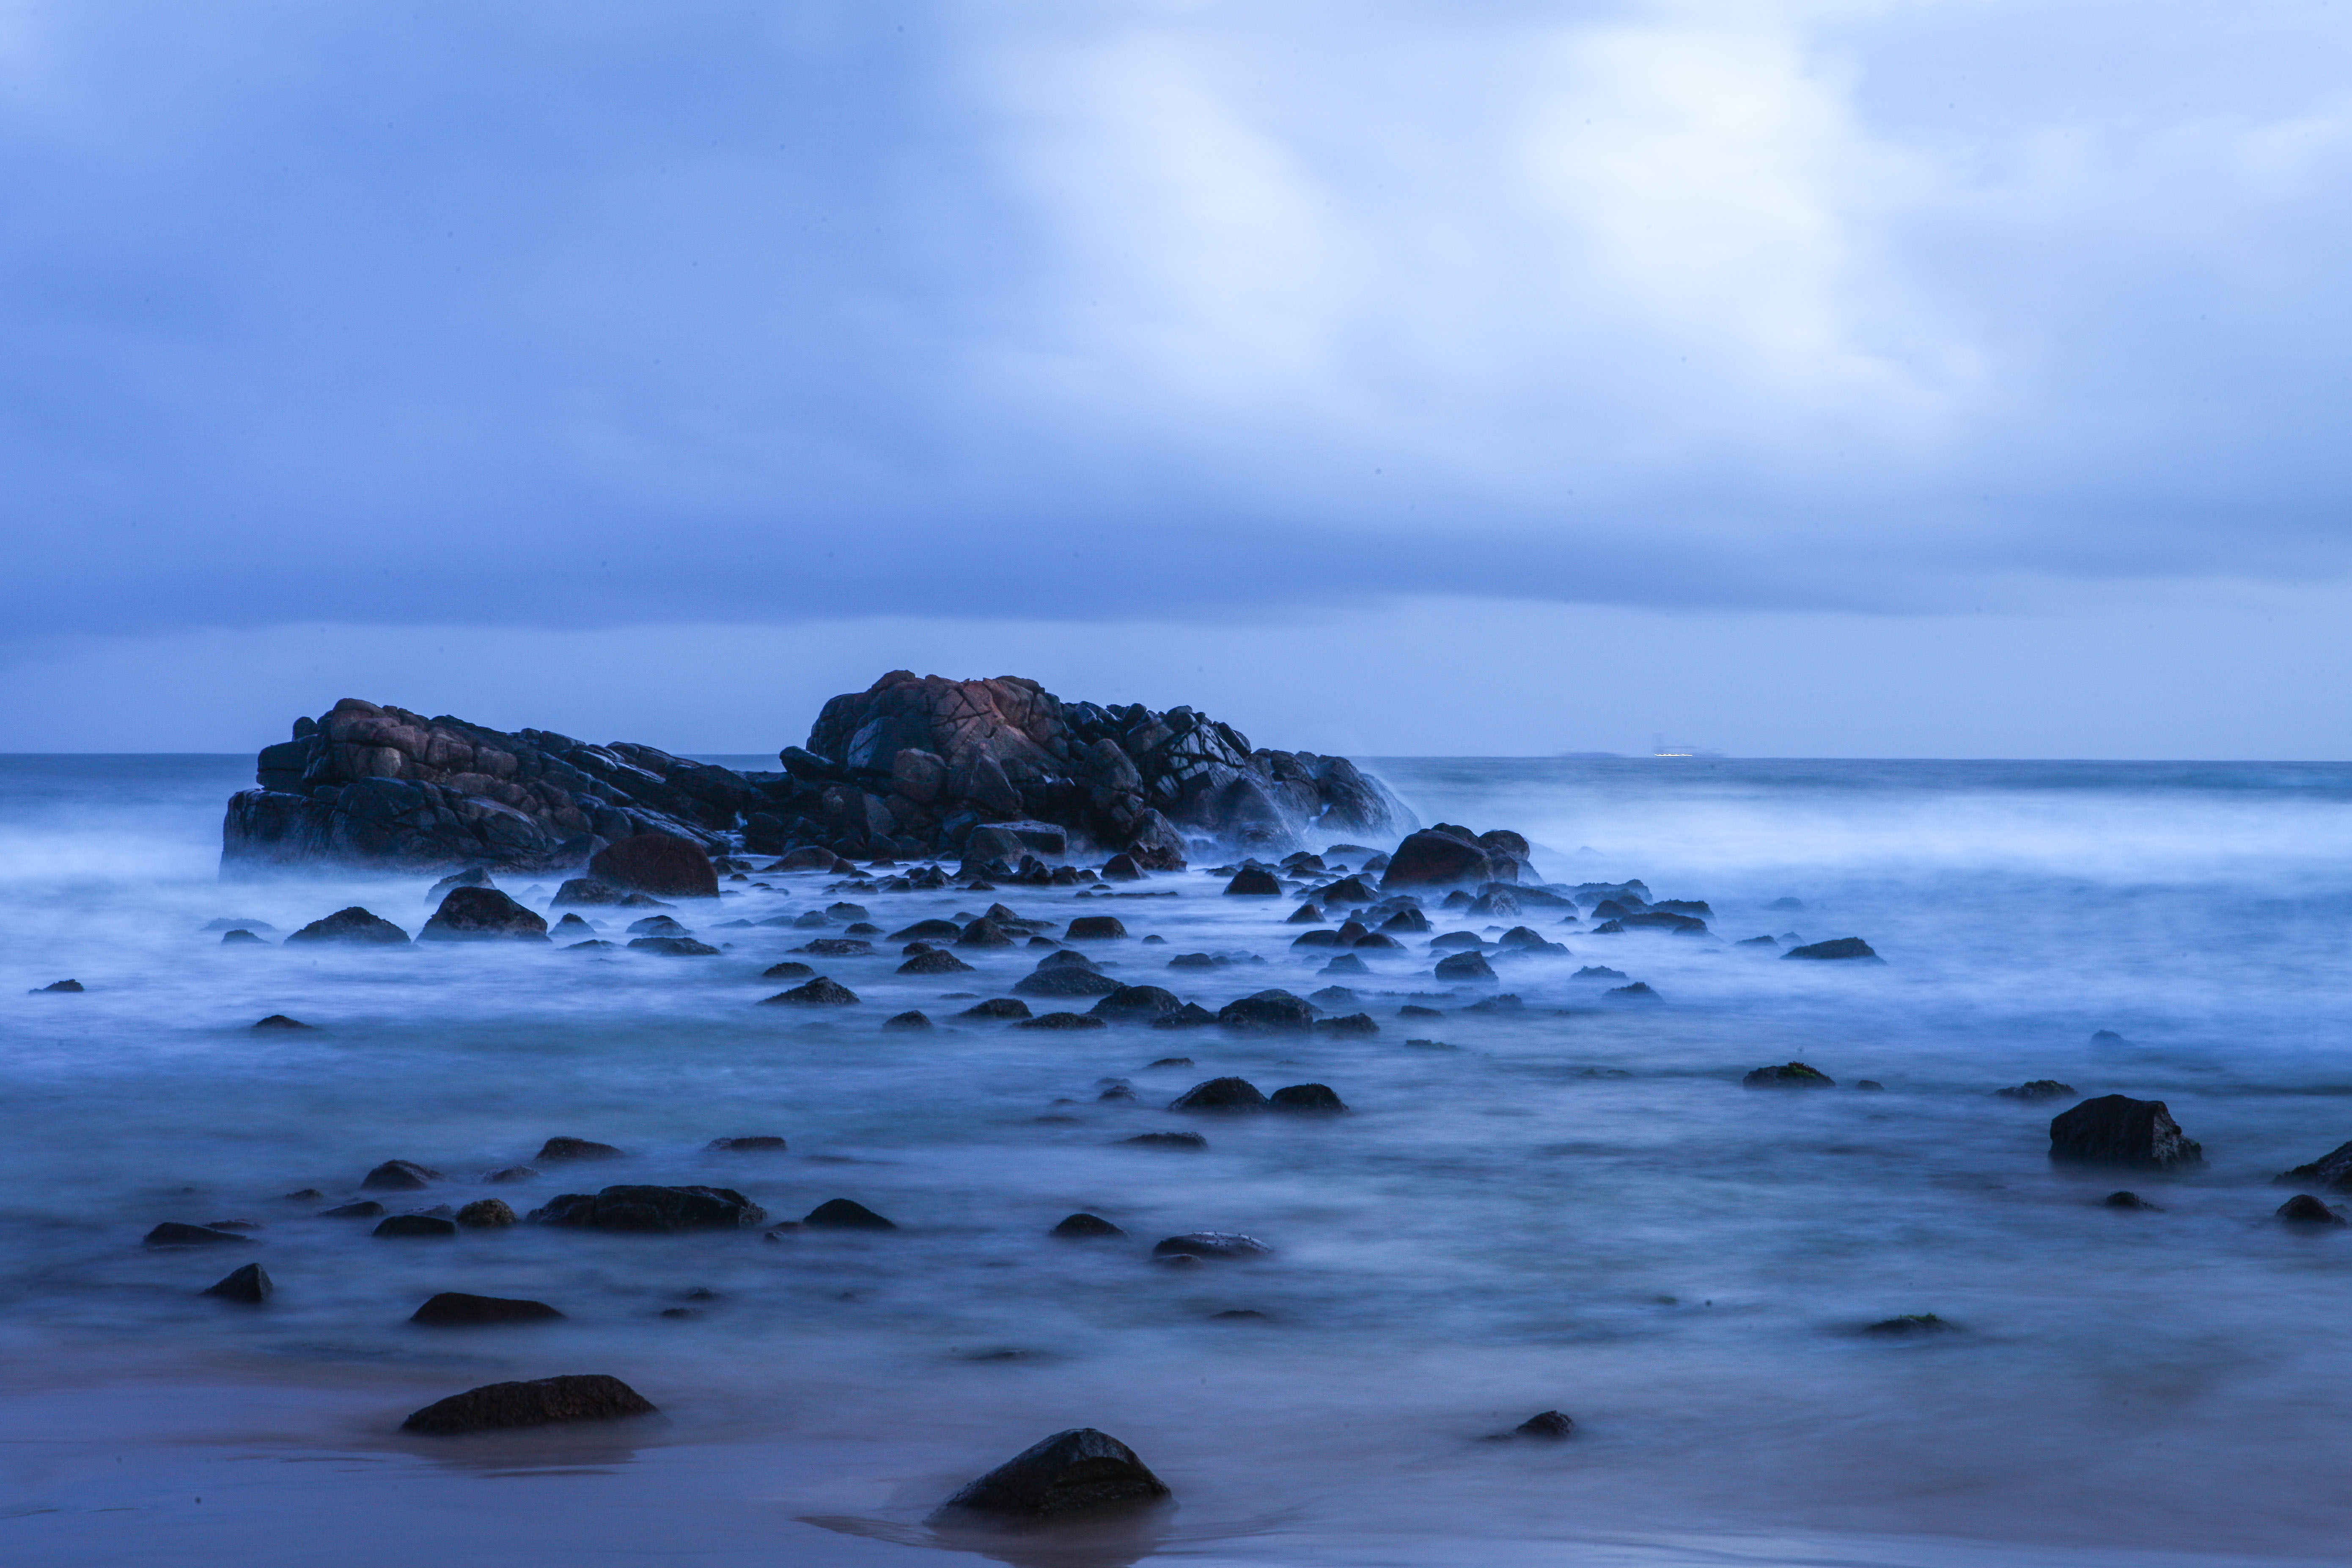 Water covers the rocks like a blanket at Mirissa beach. Photo: Charlie Malmqvist.